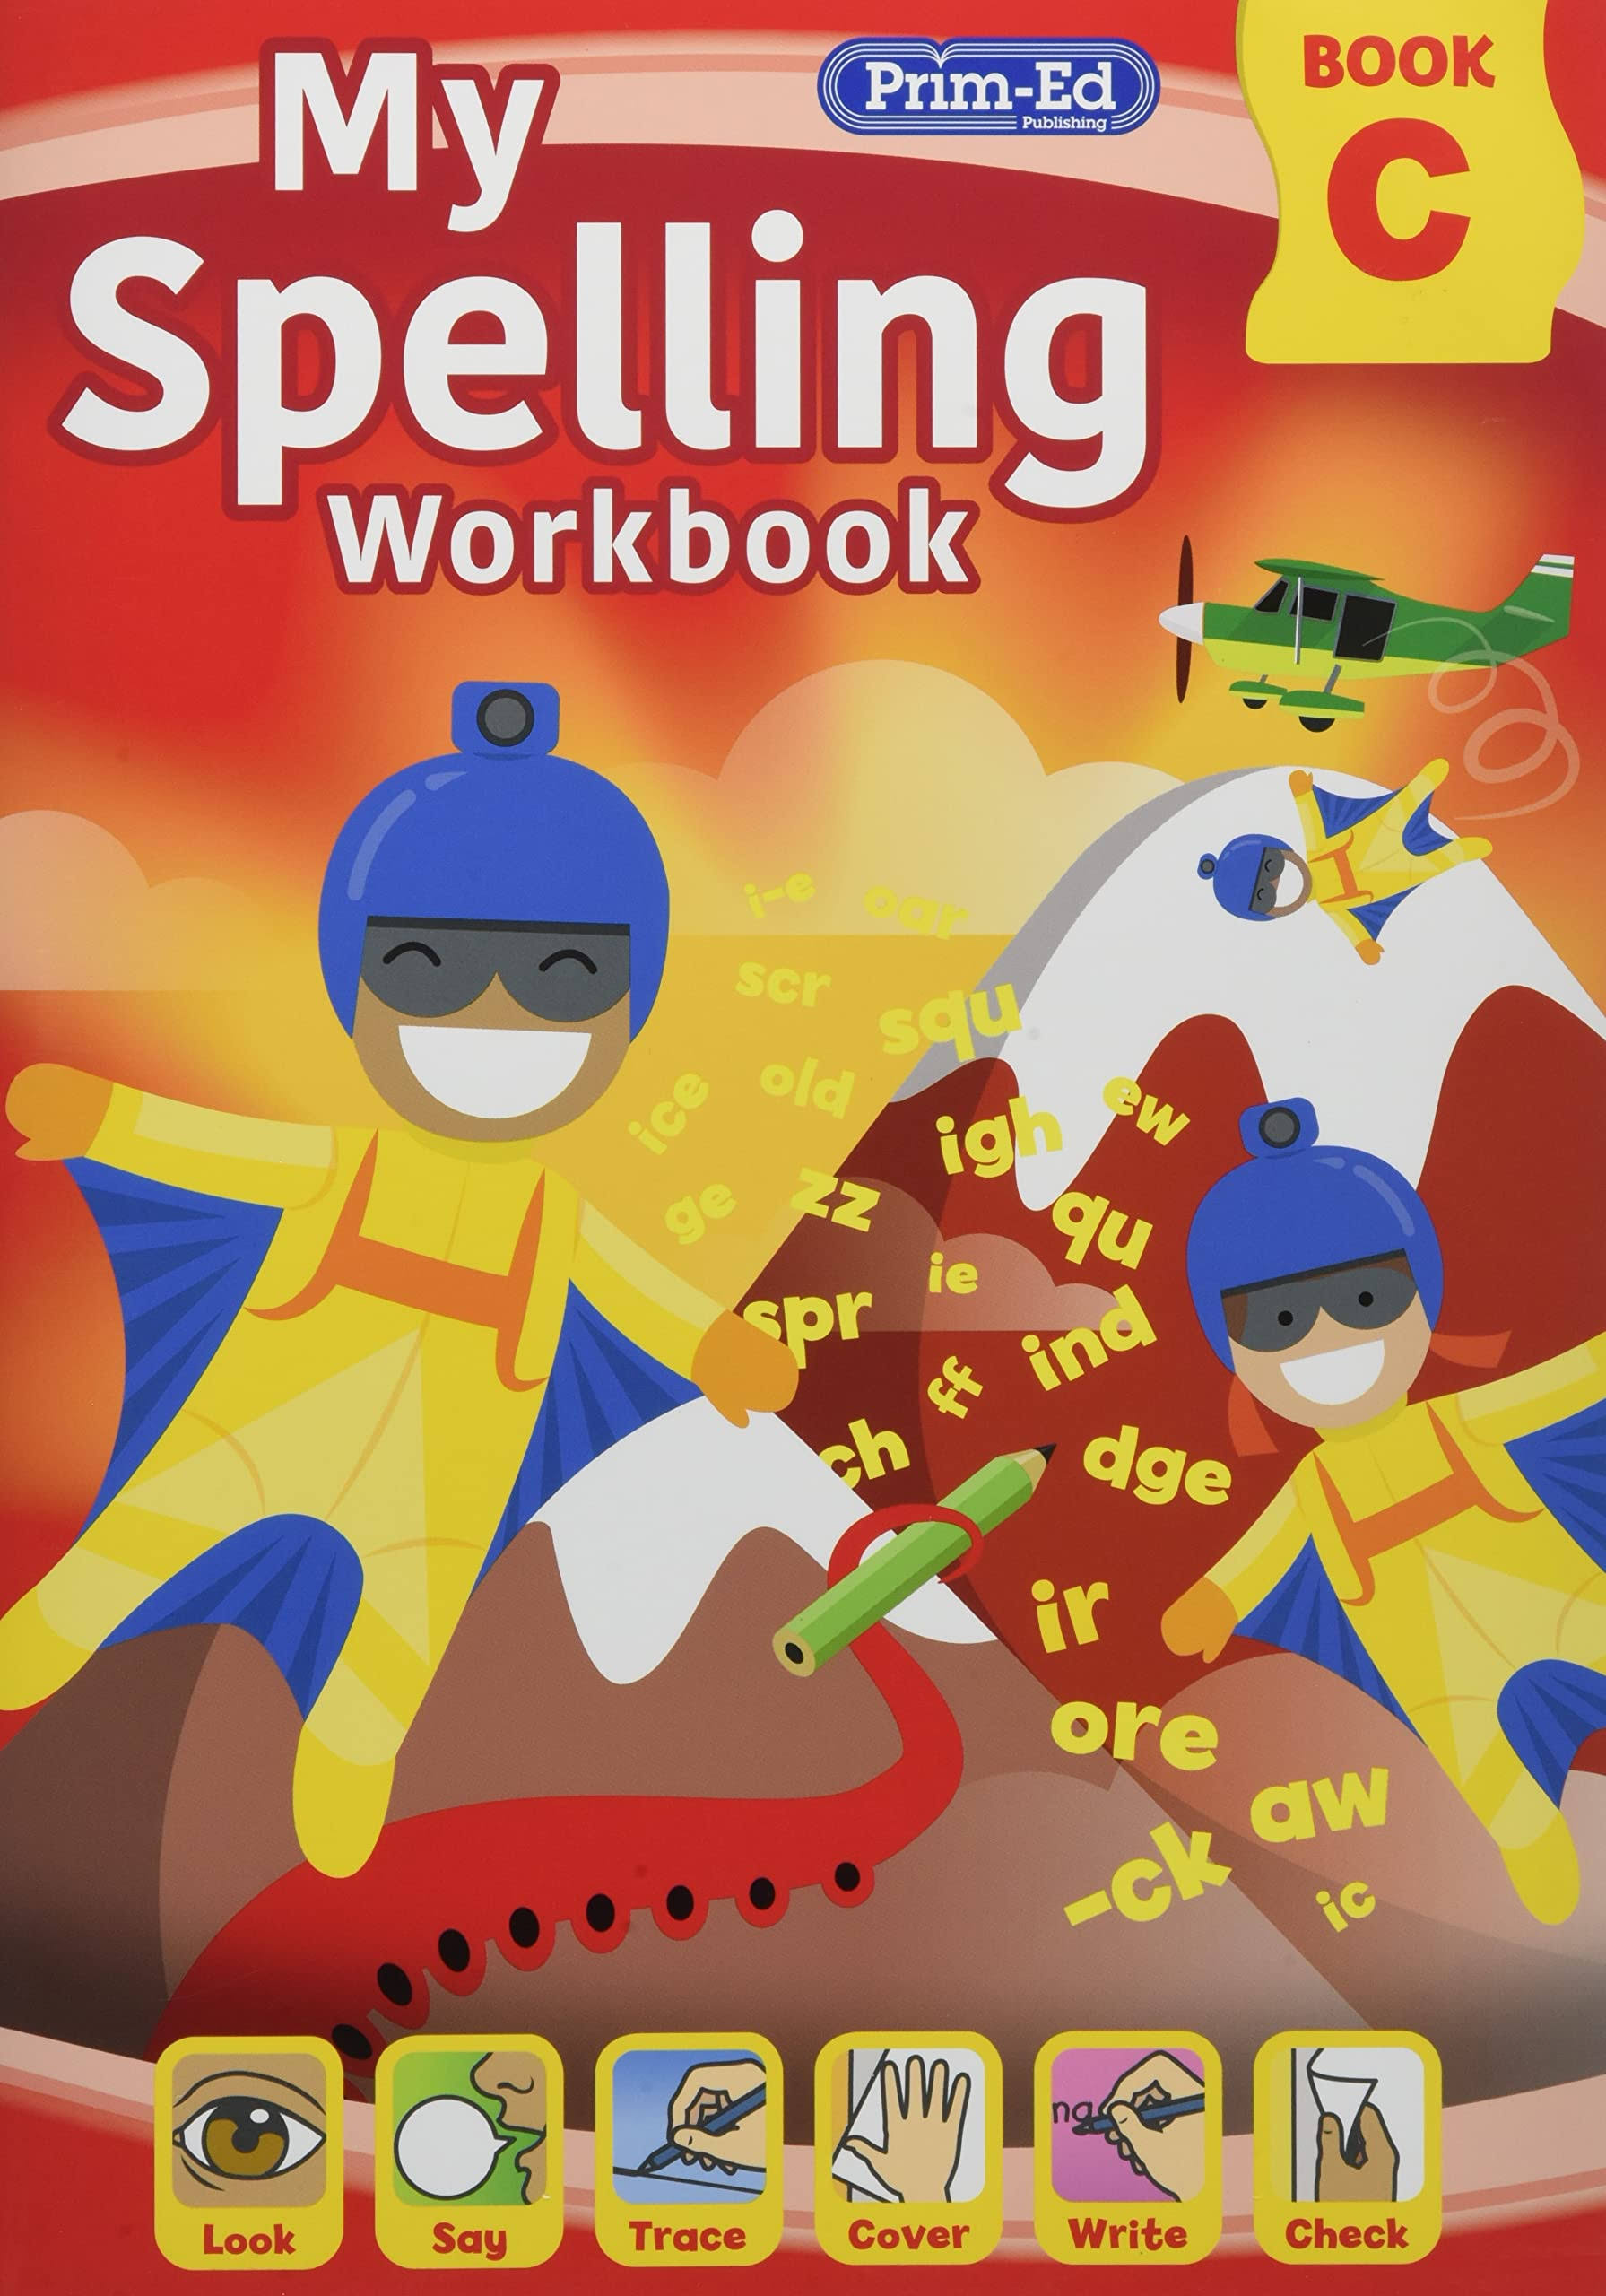 My Spelling Workbook: Book C